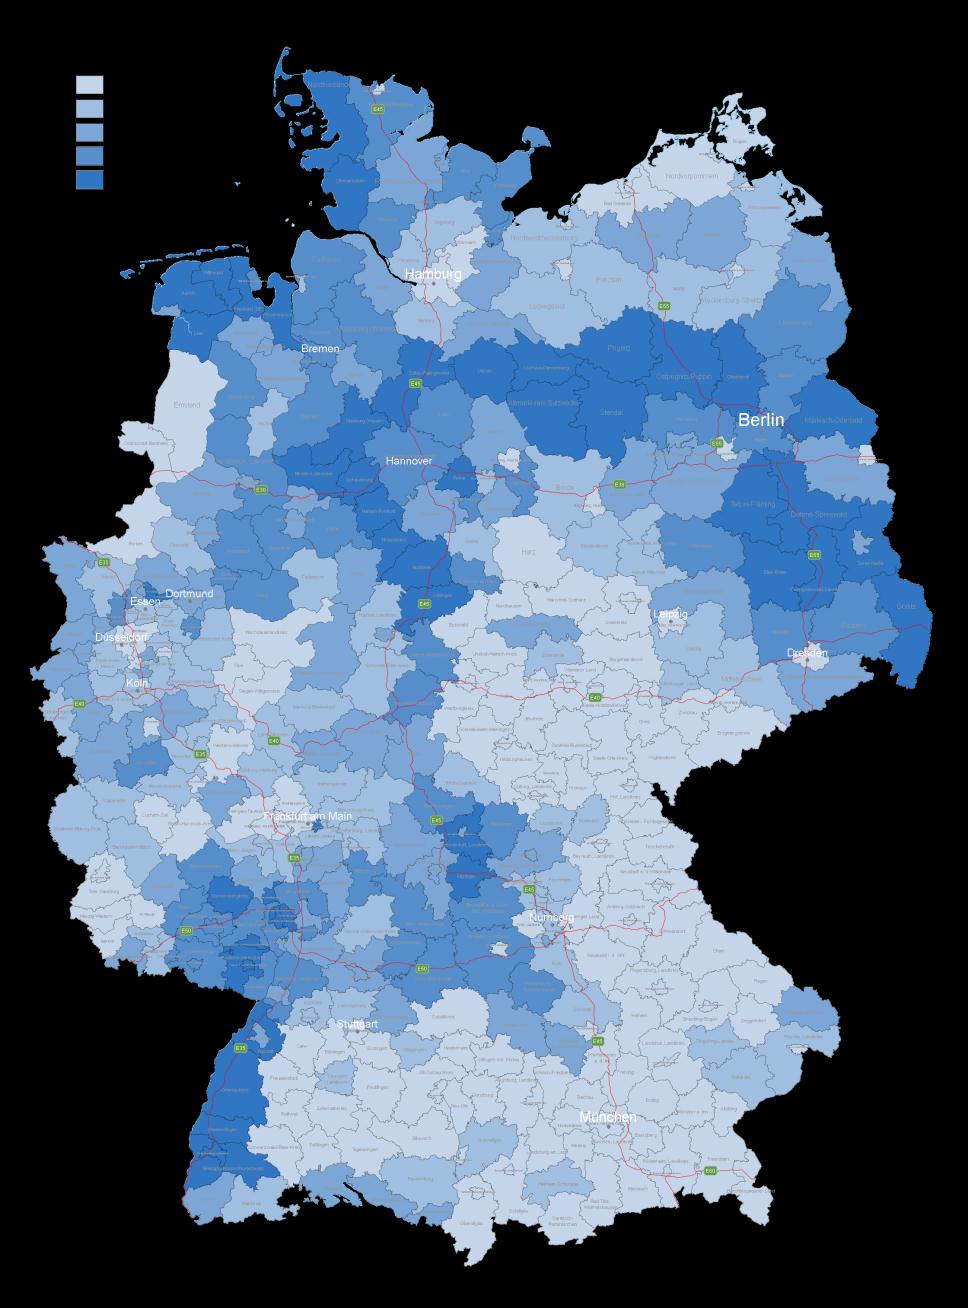 680 36.964 Ø 13% 12045 Berlin (Neukölln): 638 Youngtimer = 26,4 % Essen 13,3% 36.